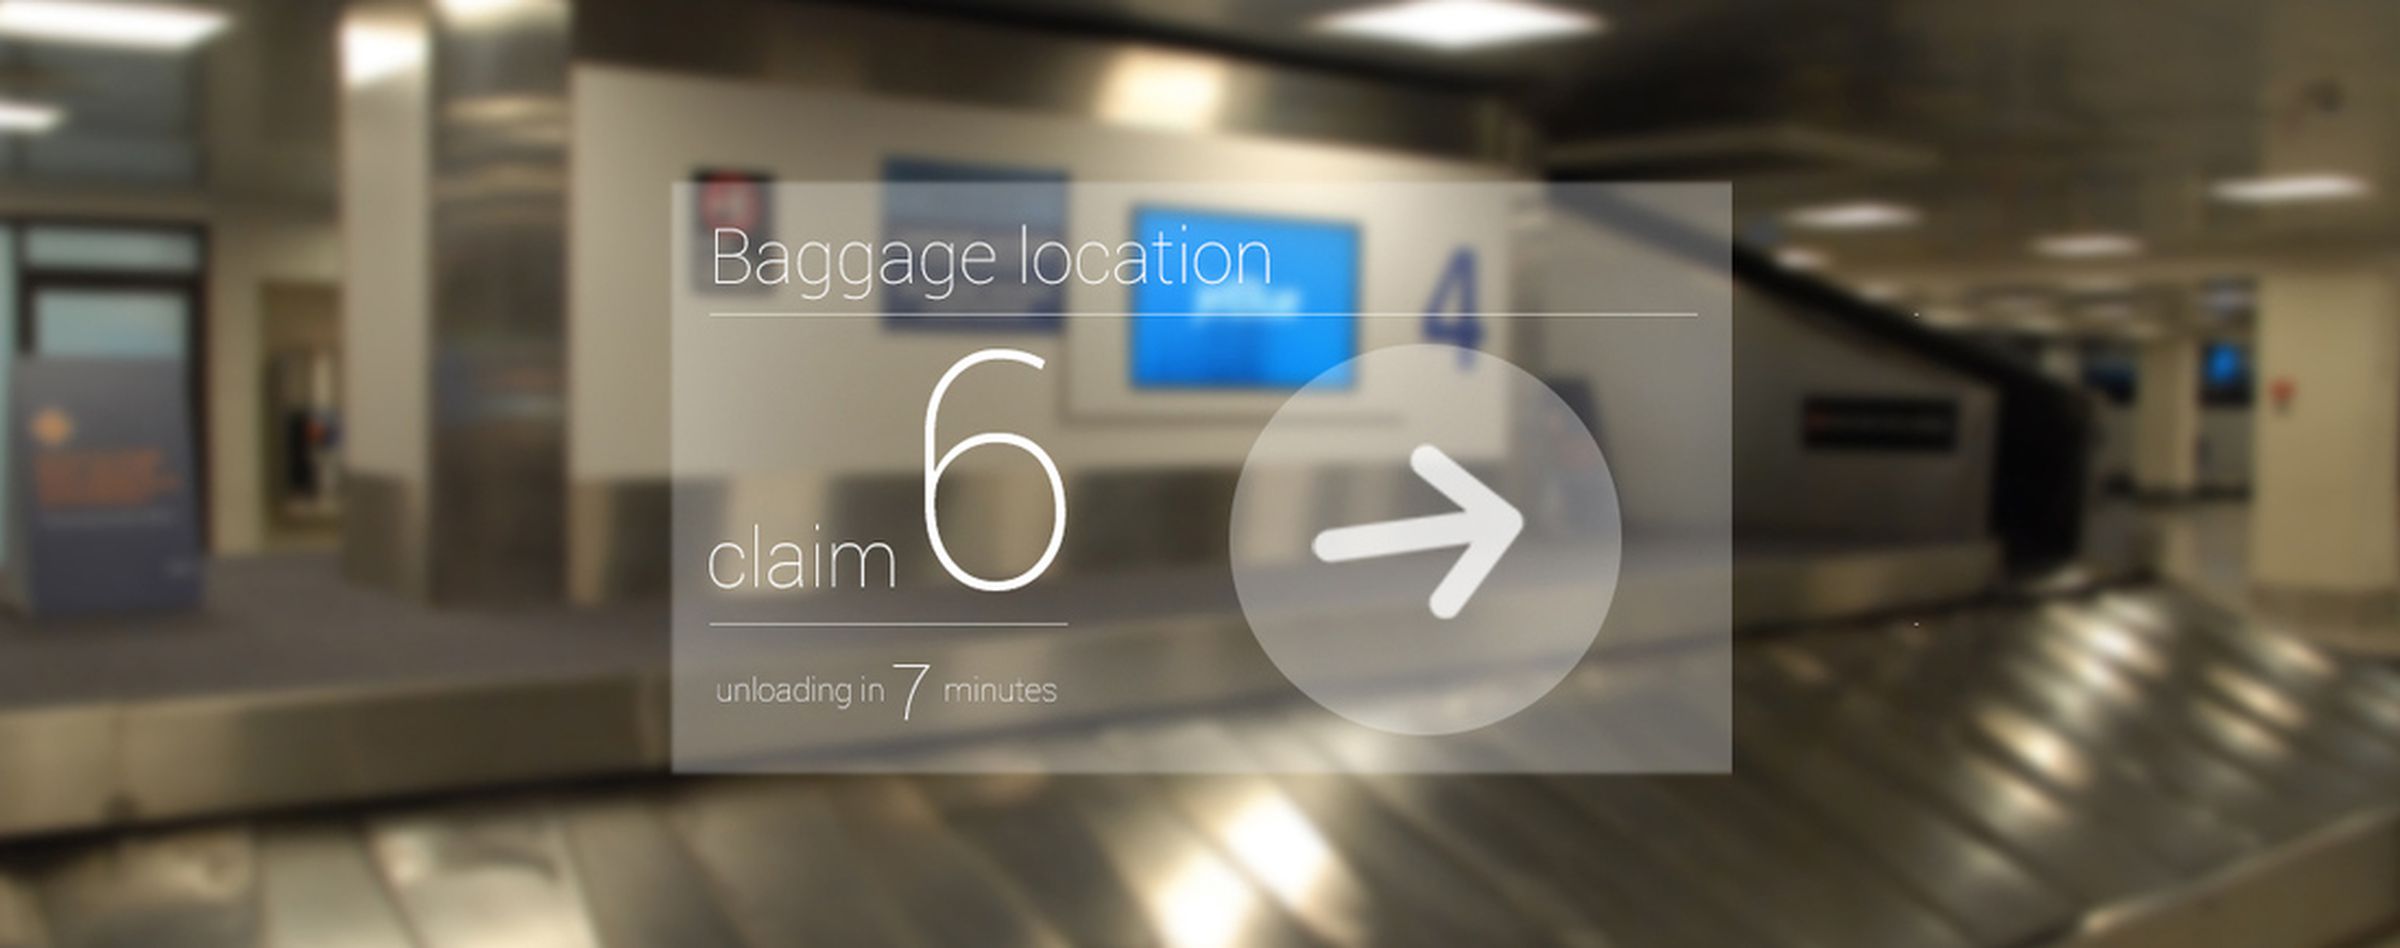 JetBlue's Google Glass-enhanced airport mockups